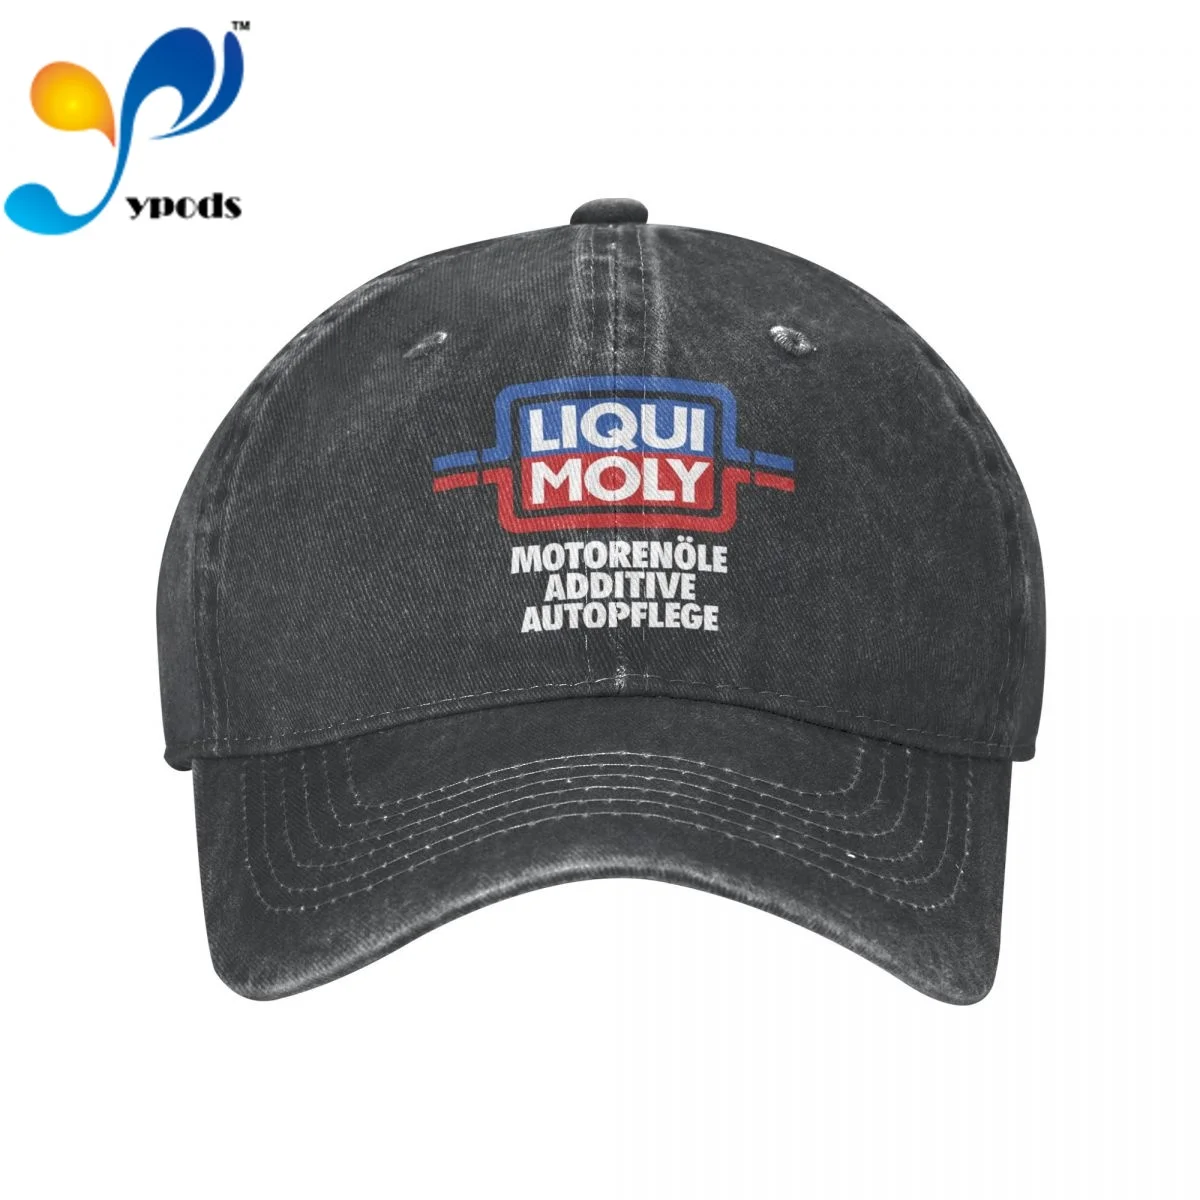 

Liqui Moly 2003 Logo Women Men Cotton Baseball Cap Unisex Casual Caps Outdoor Trucker Snapback Hats